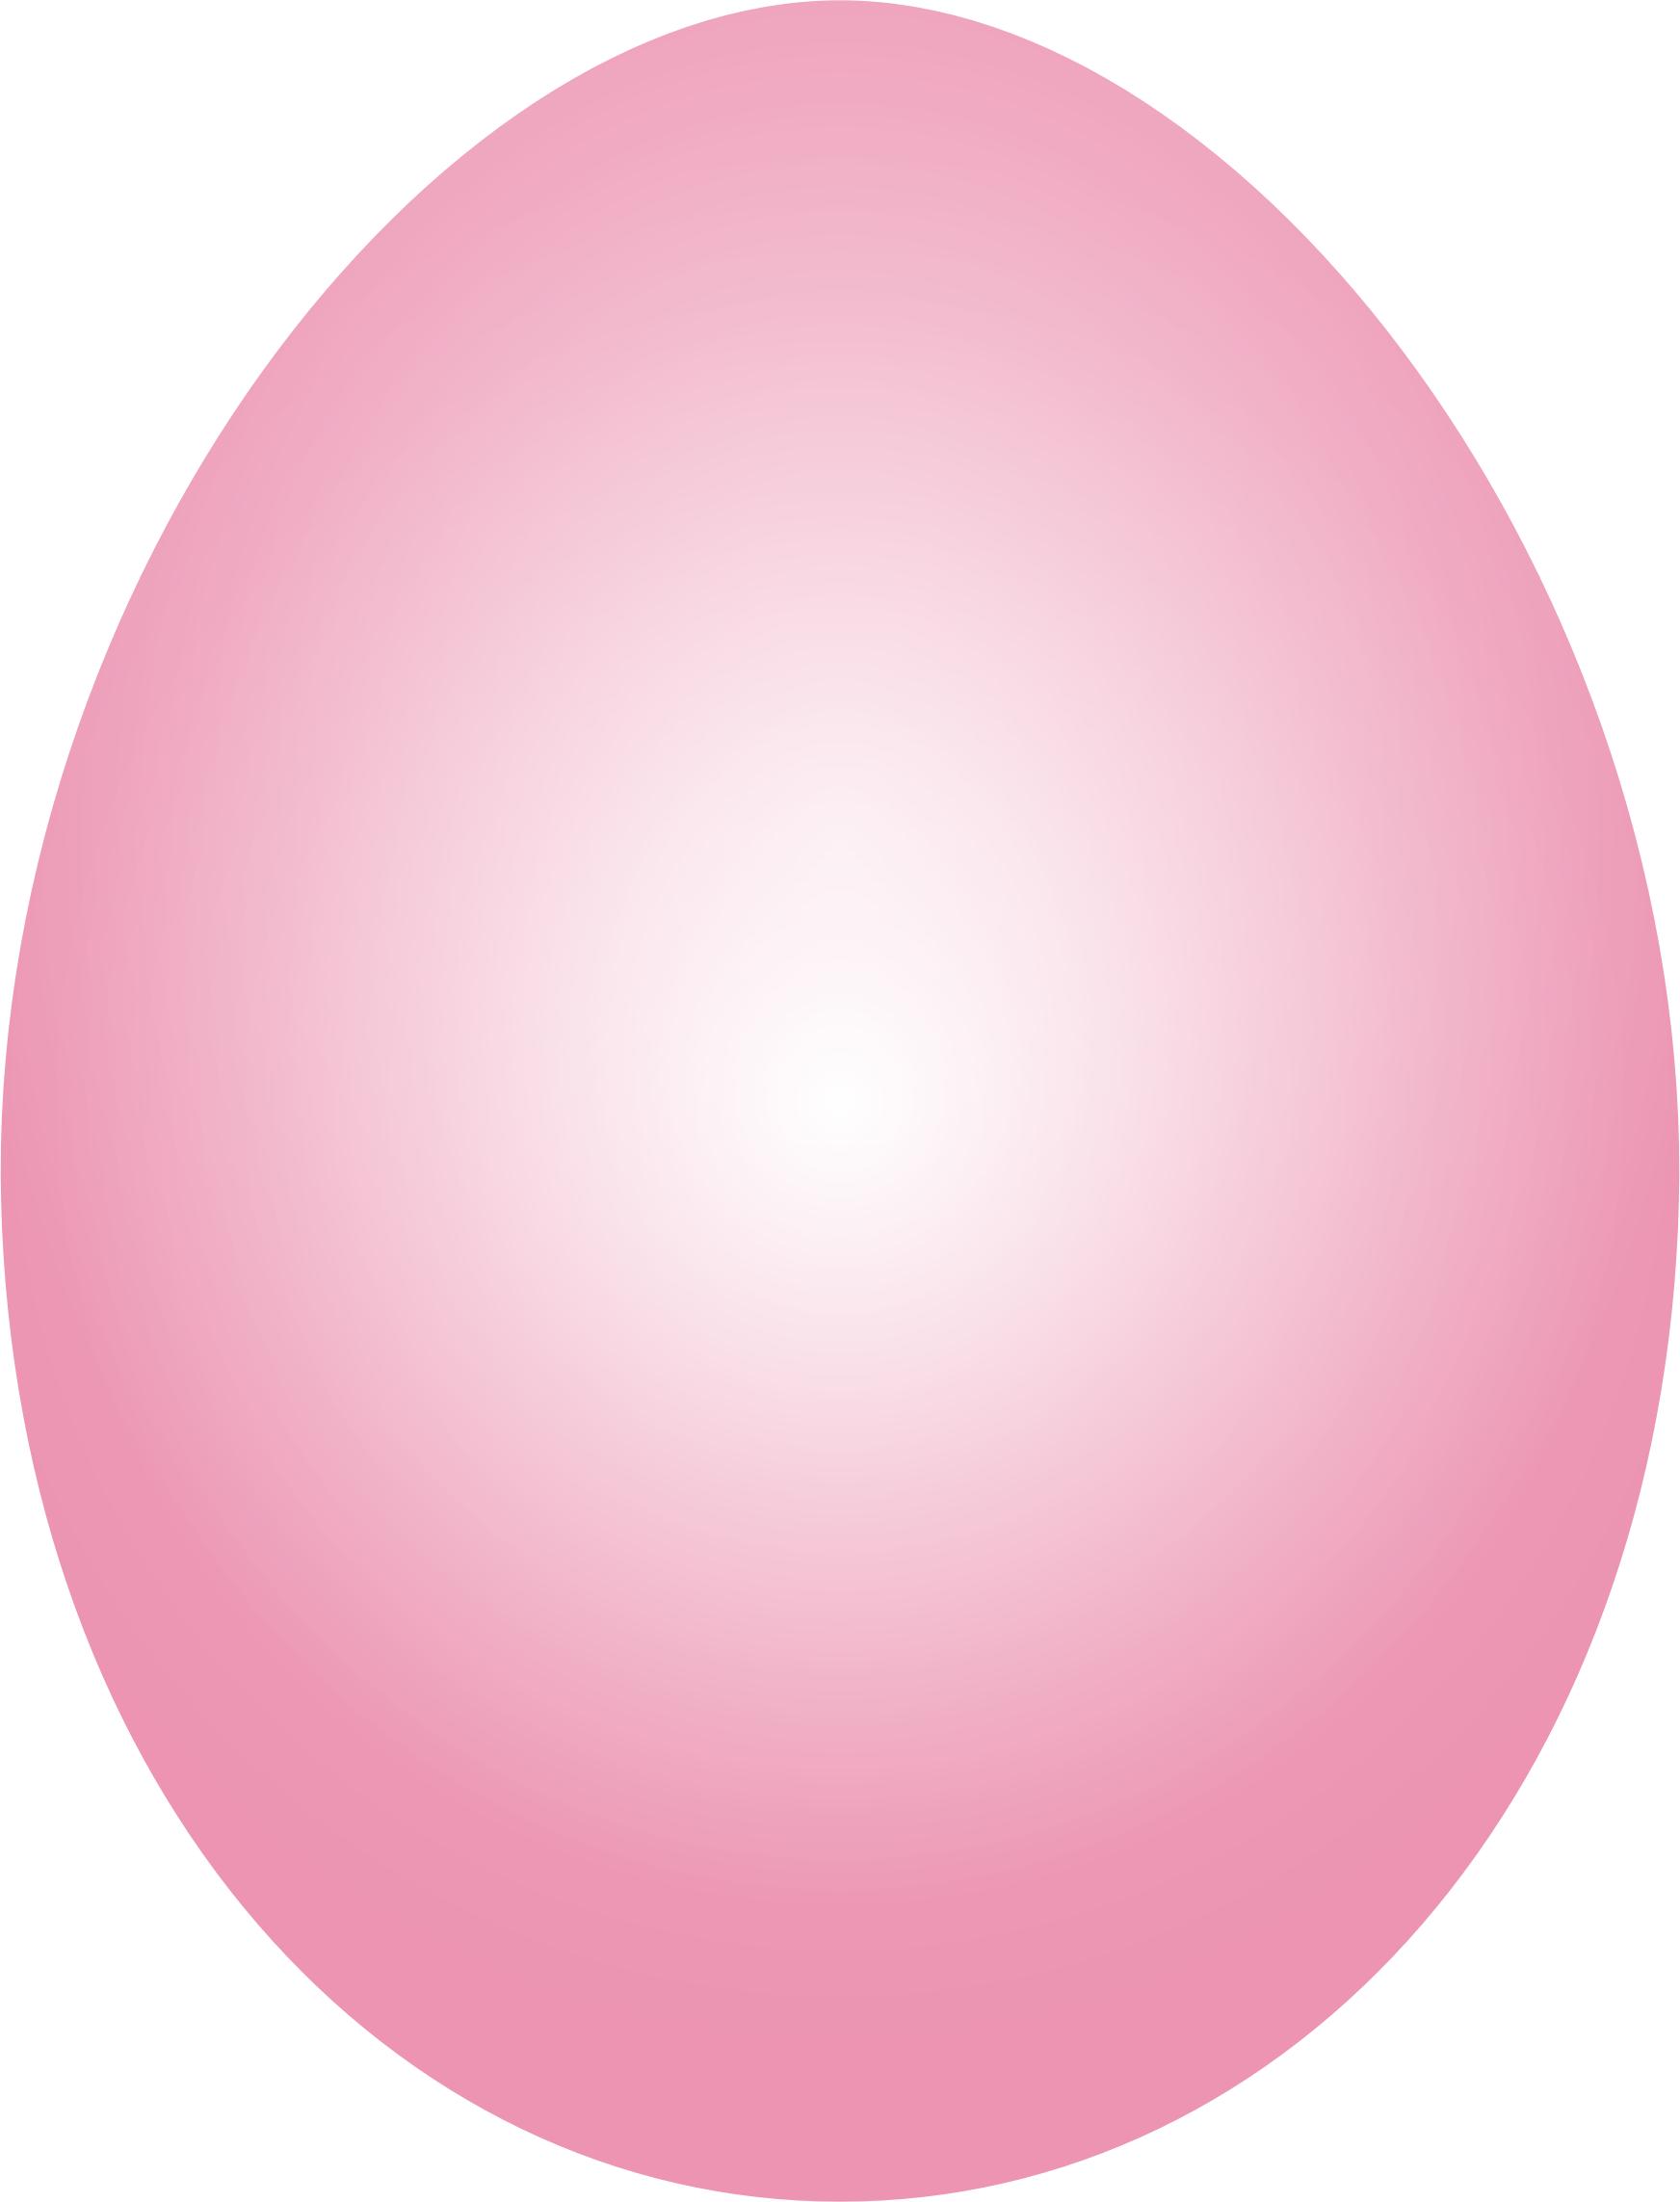 Pink egg photo